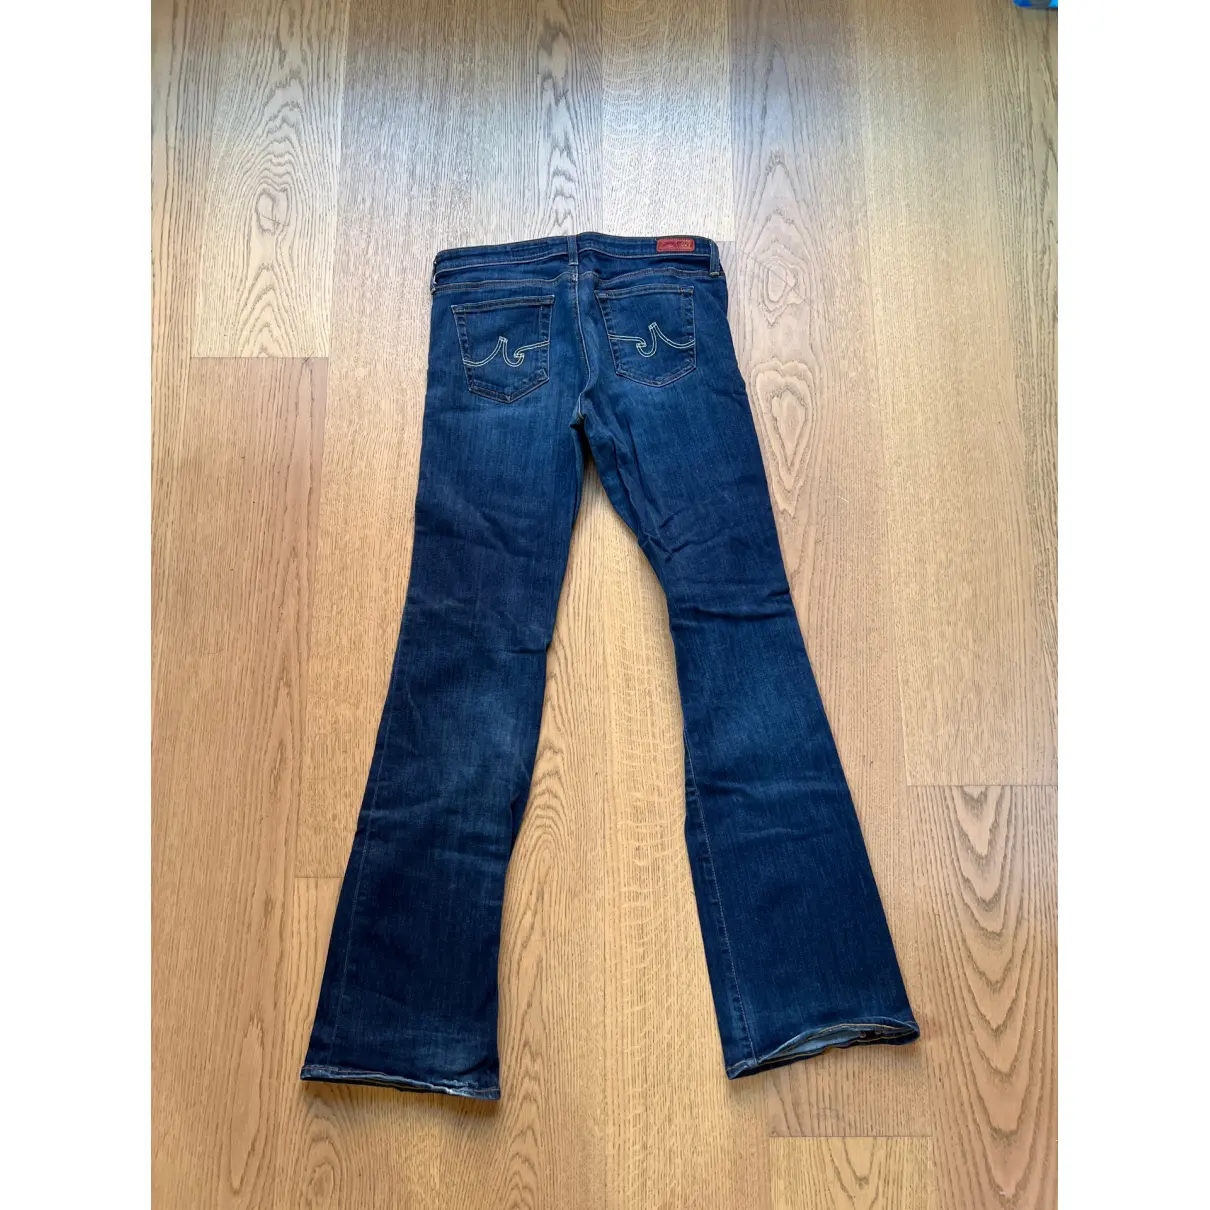 Buy Adriano Goldschmied Bootcut jeans online